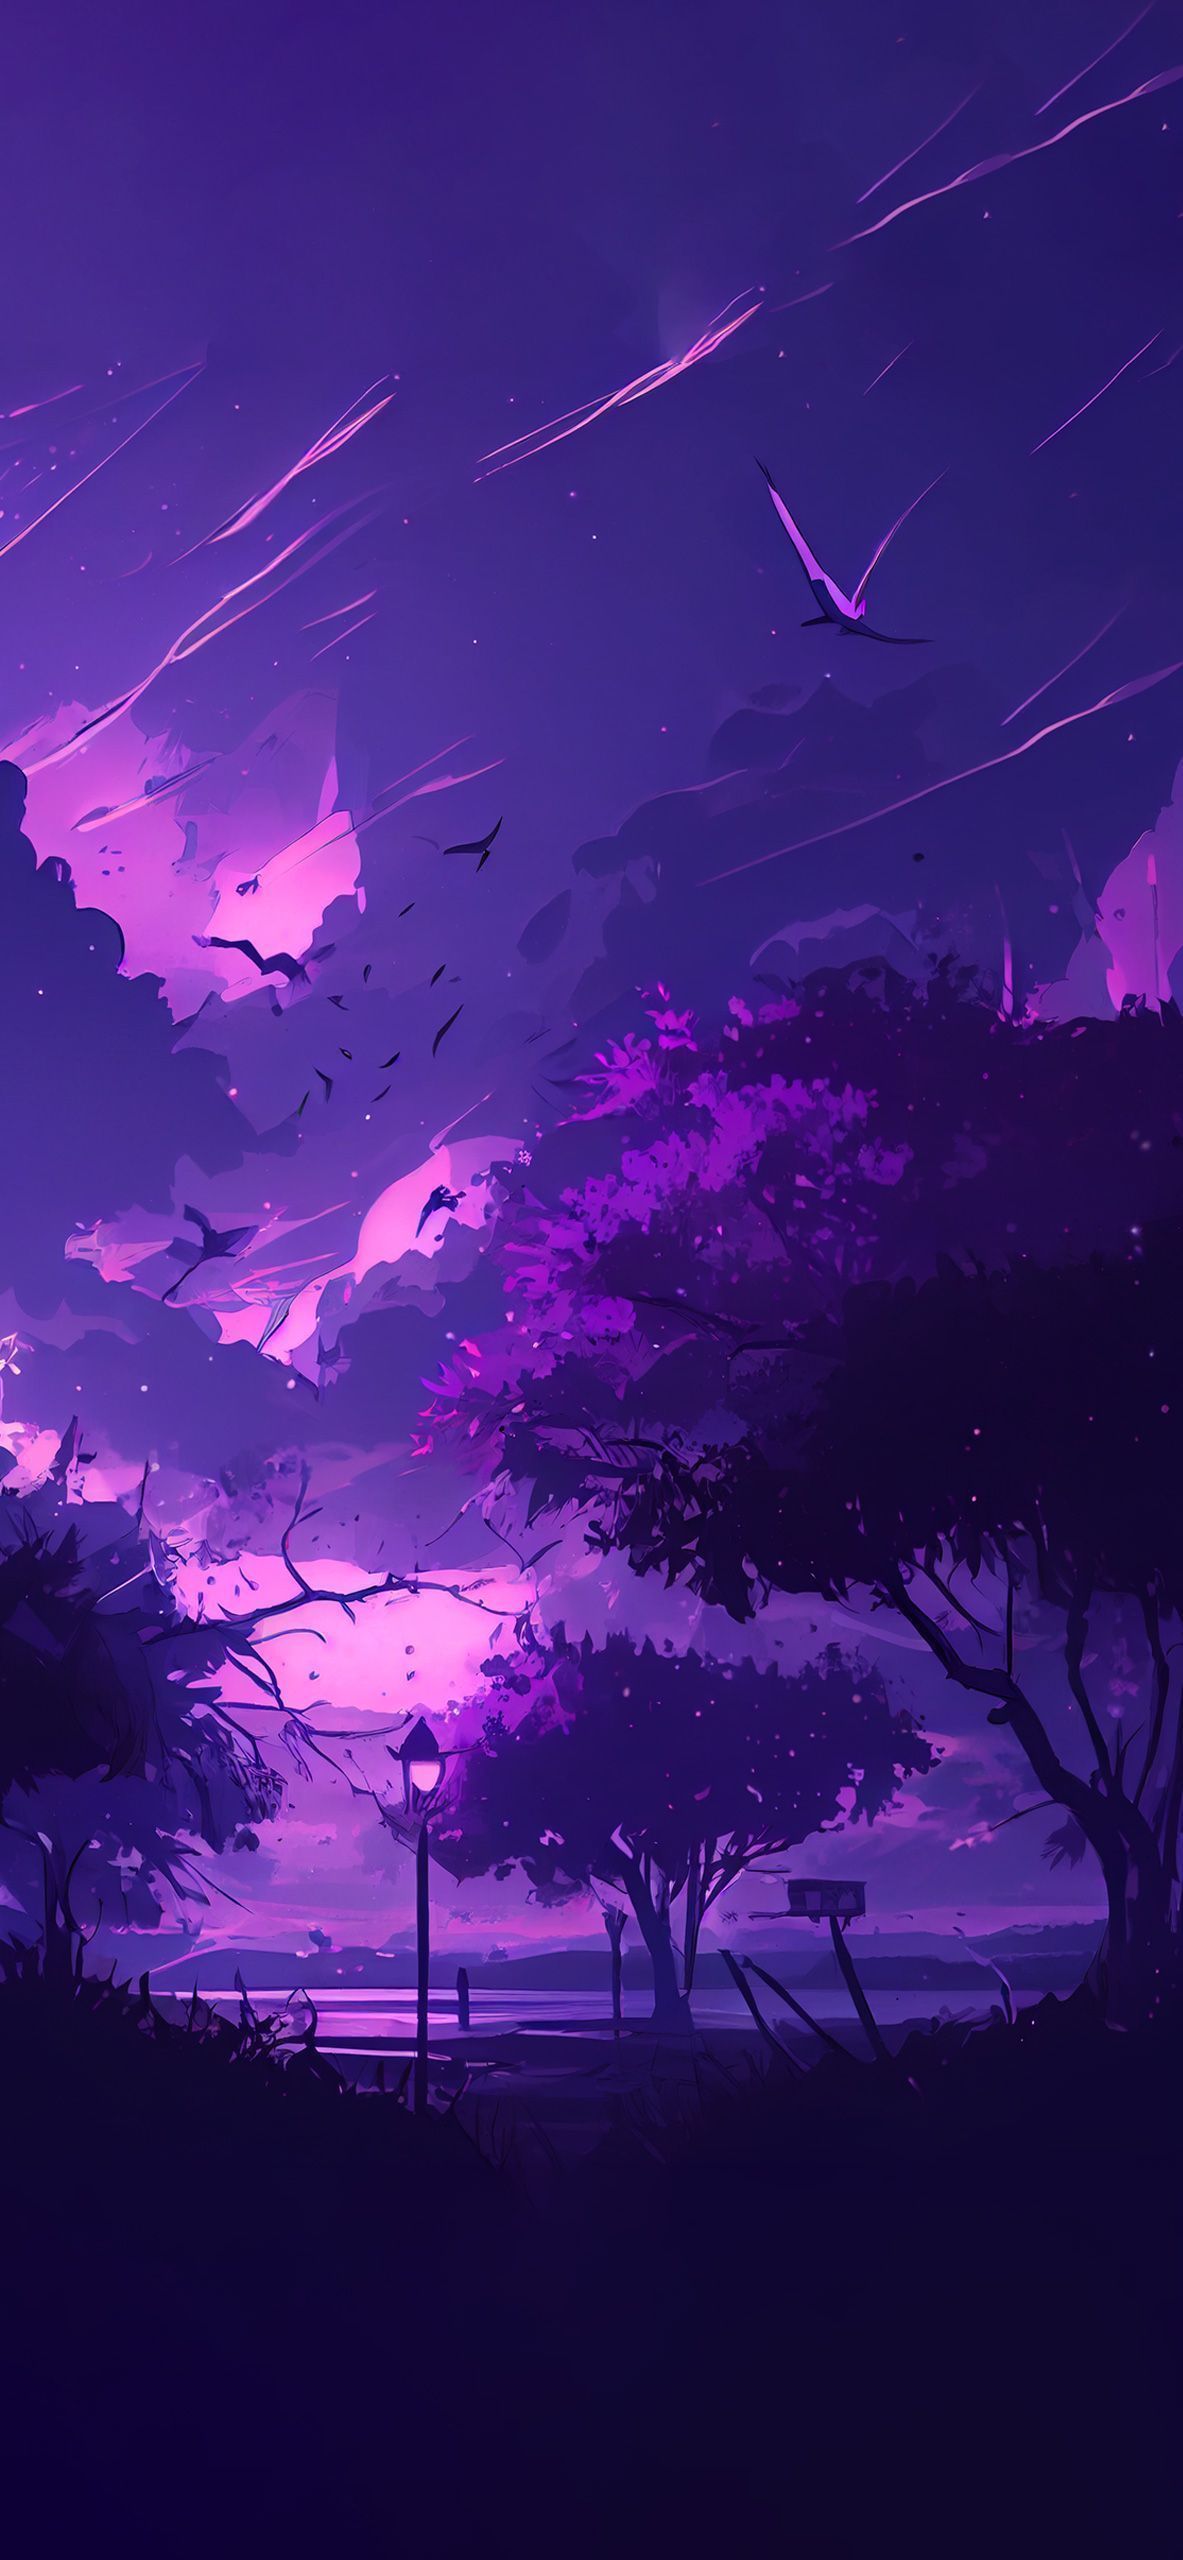 Aesthetic purple sky with birds and trees wallpaper - Purple, violet, dark purple